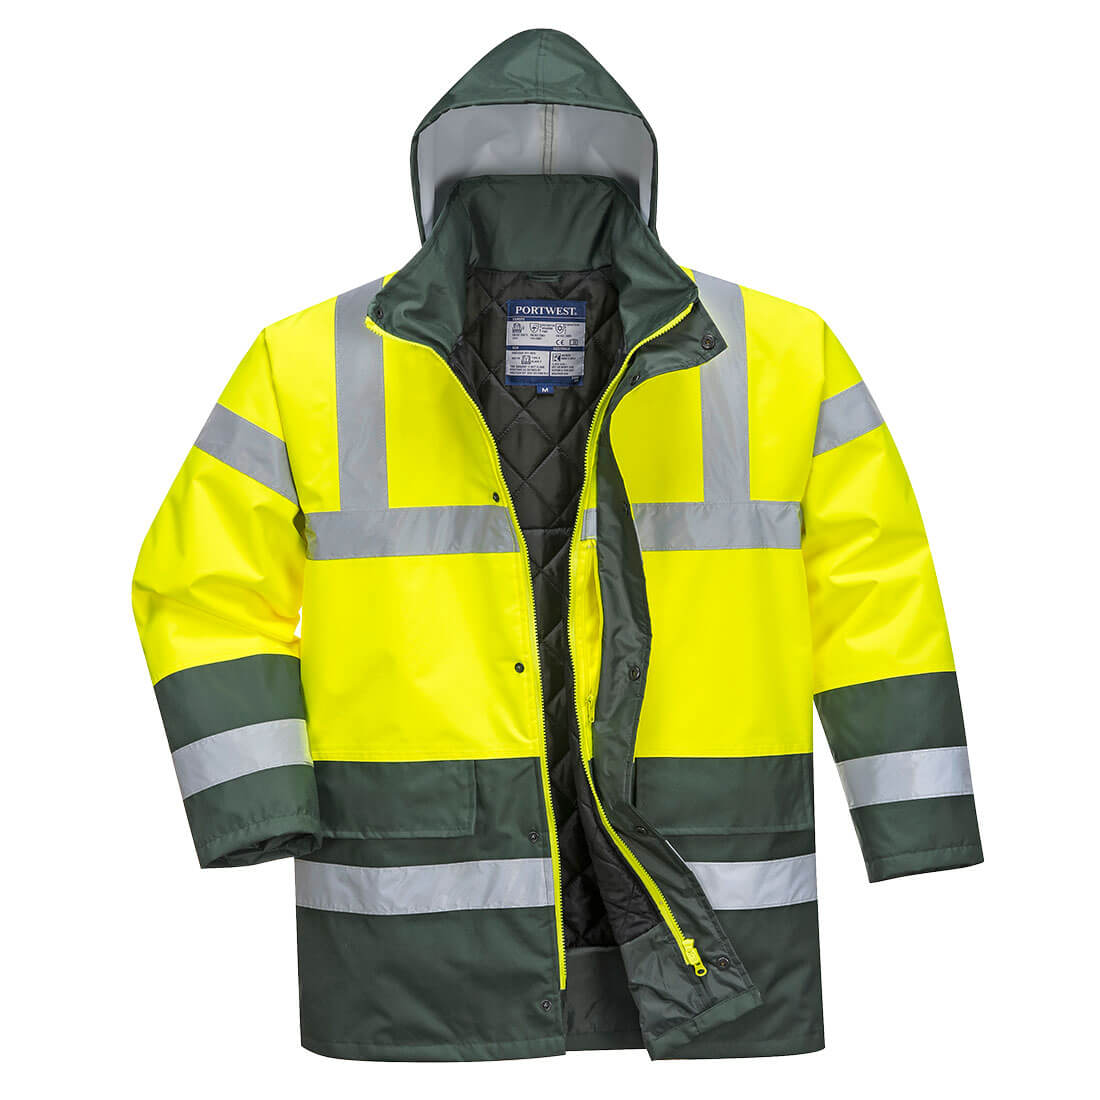 Portwest S466 Hi-viz Contrast Traffic Jacket Waterproof Thermal Insulation CE Certified Yellow/Green - Hamtons Direct